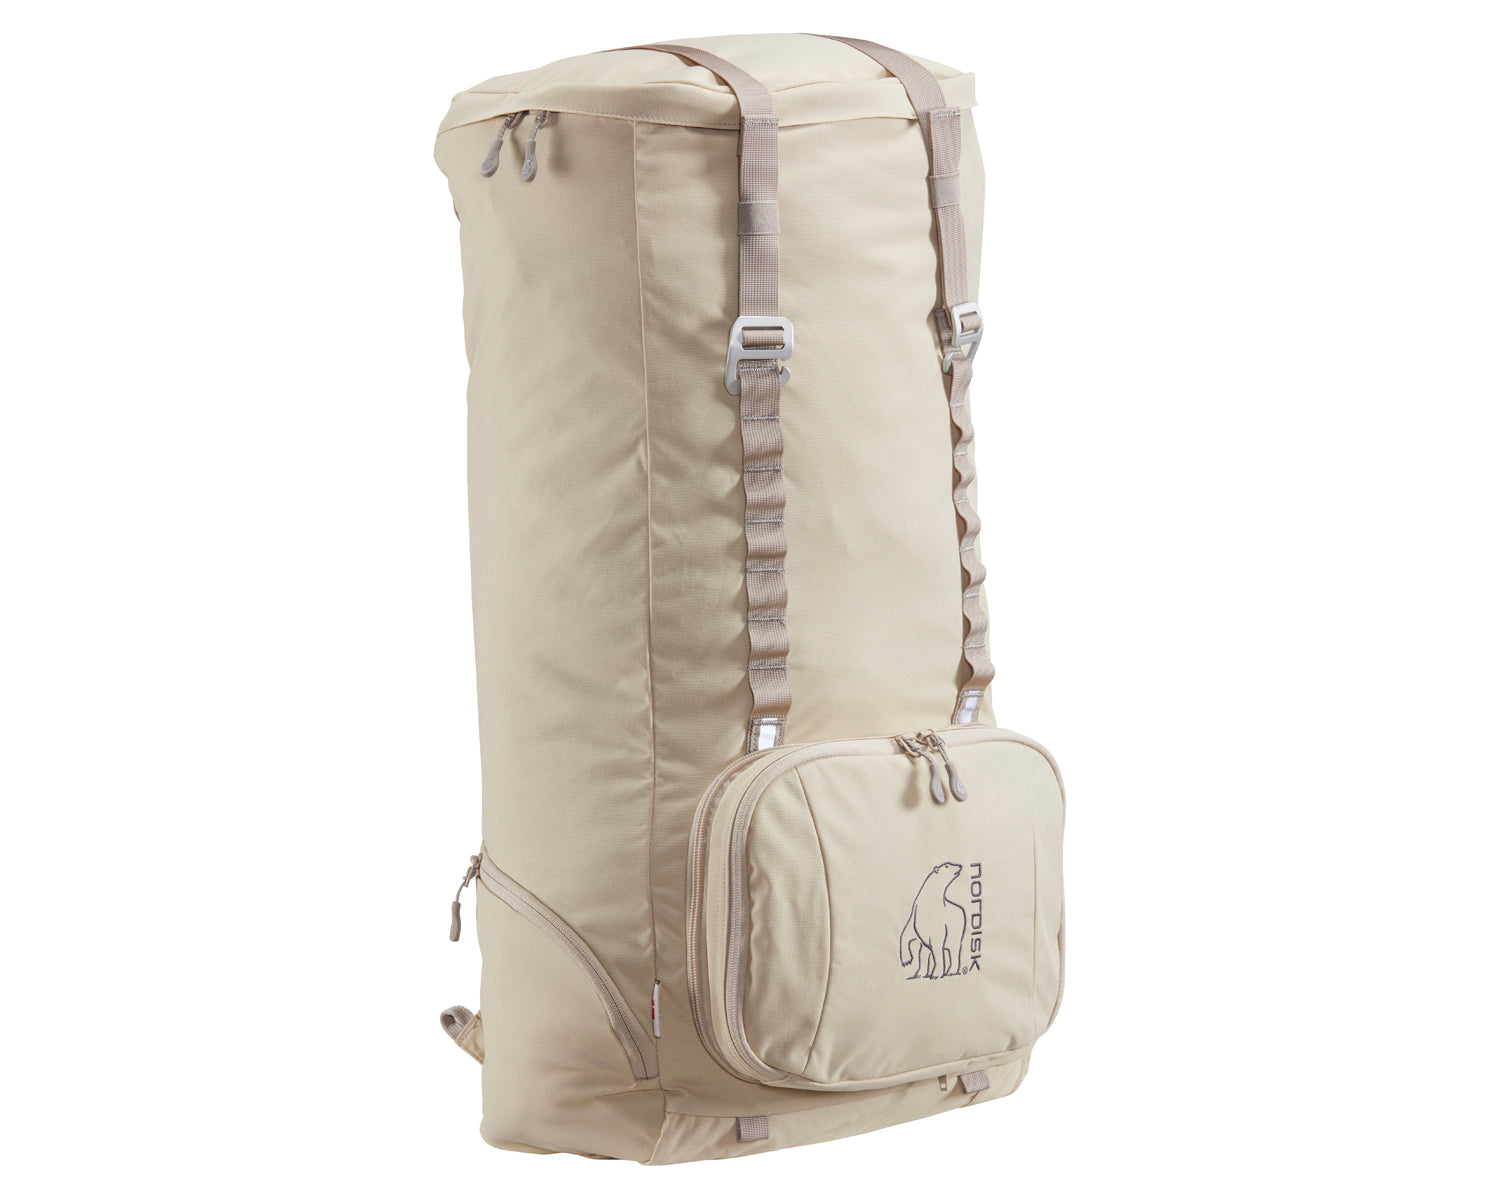 Yggdrasil backpack - 22-37 L - Sand